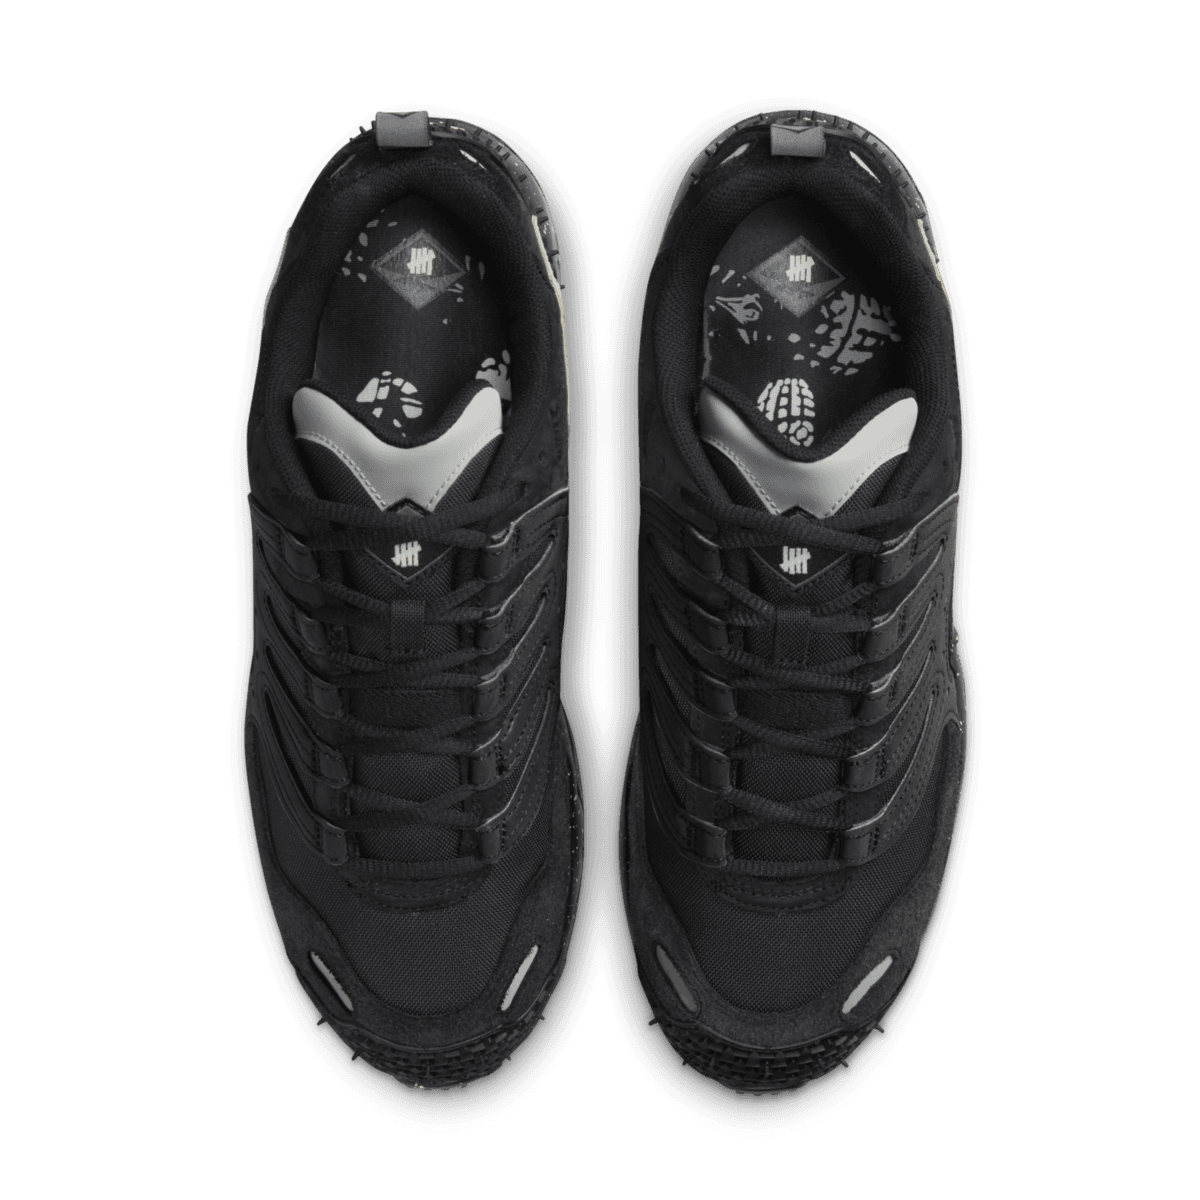 Undefeated x Nike Air Terra Humara 'Black'